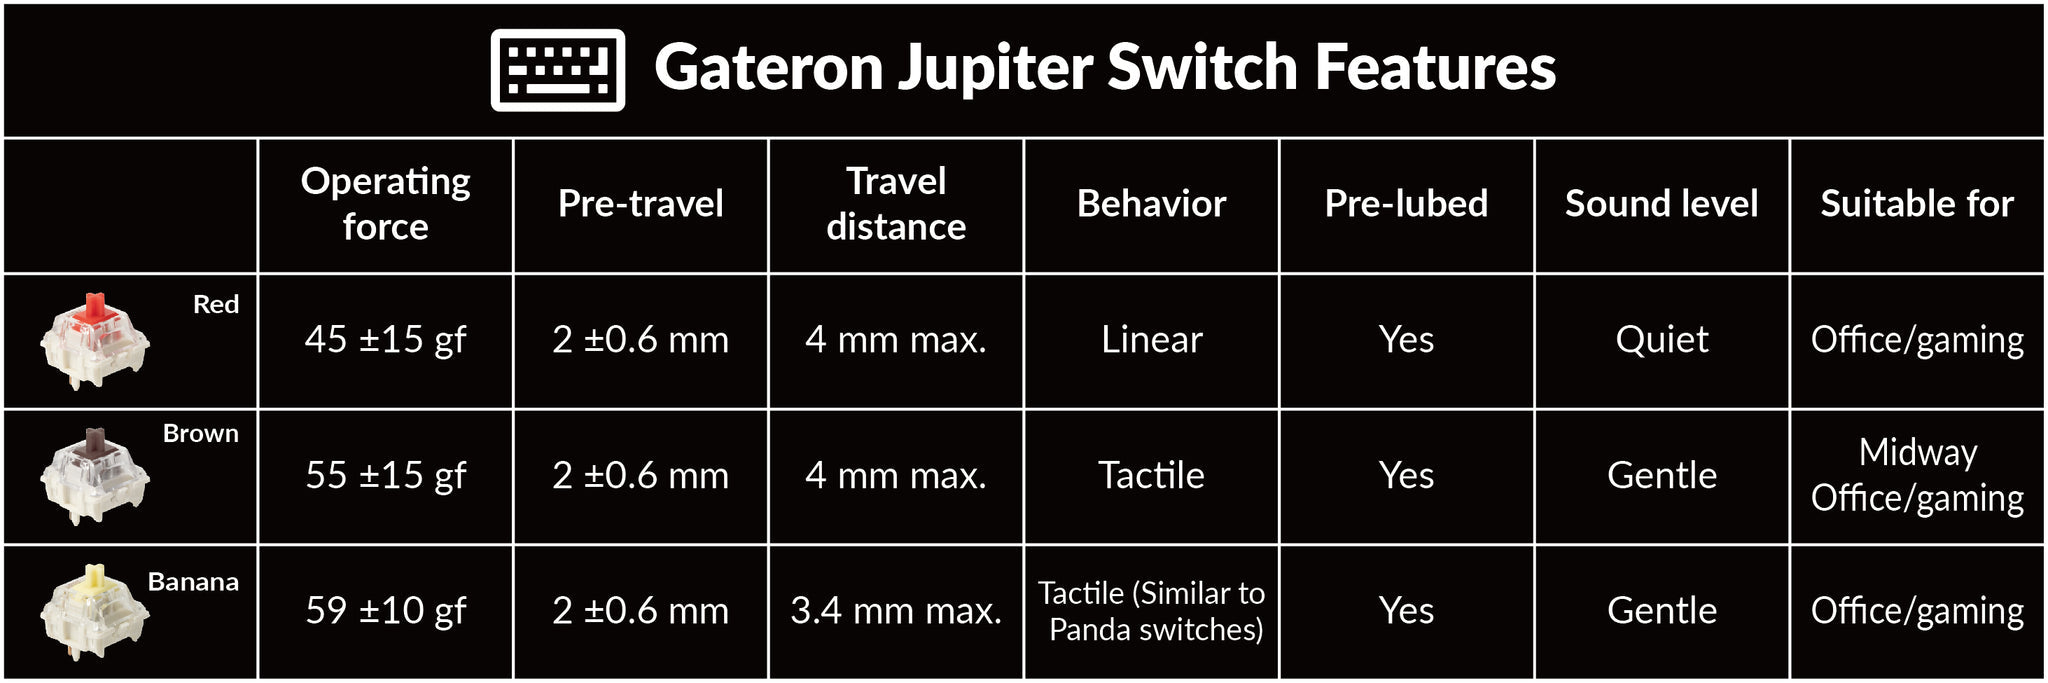 keychron-gateron-jupiter-mx-mechanical-switch-red-brown-banana_2048x__PID:2e9361e5-9fdf-4701-9d77-dbb0113c9c15